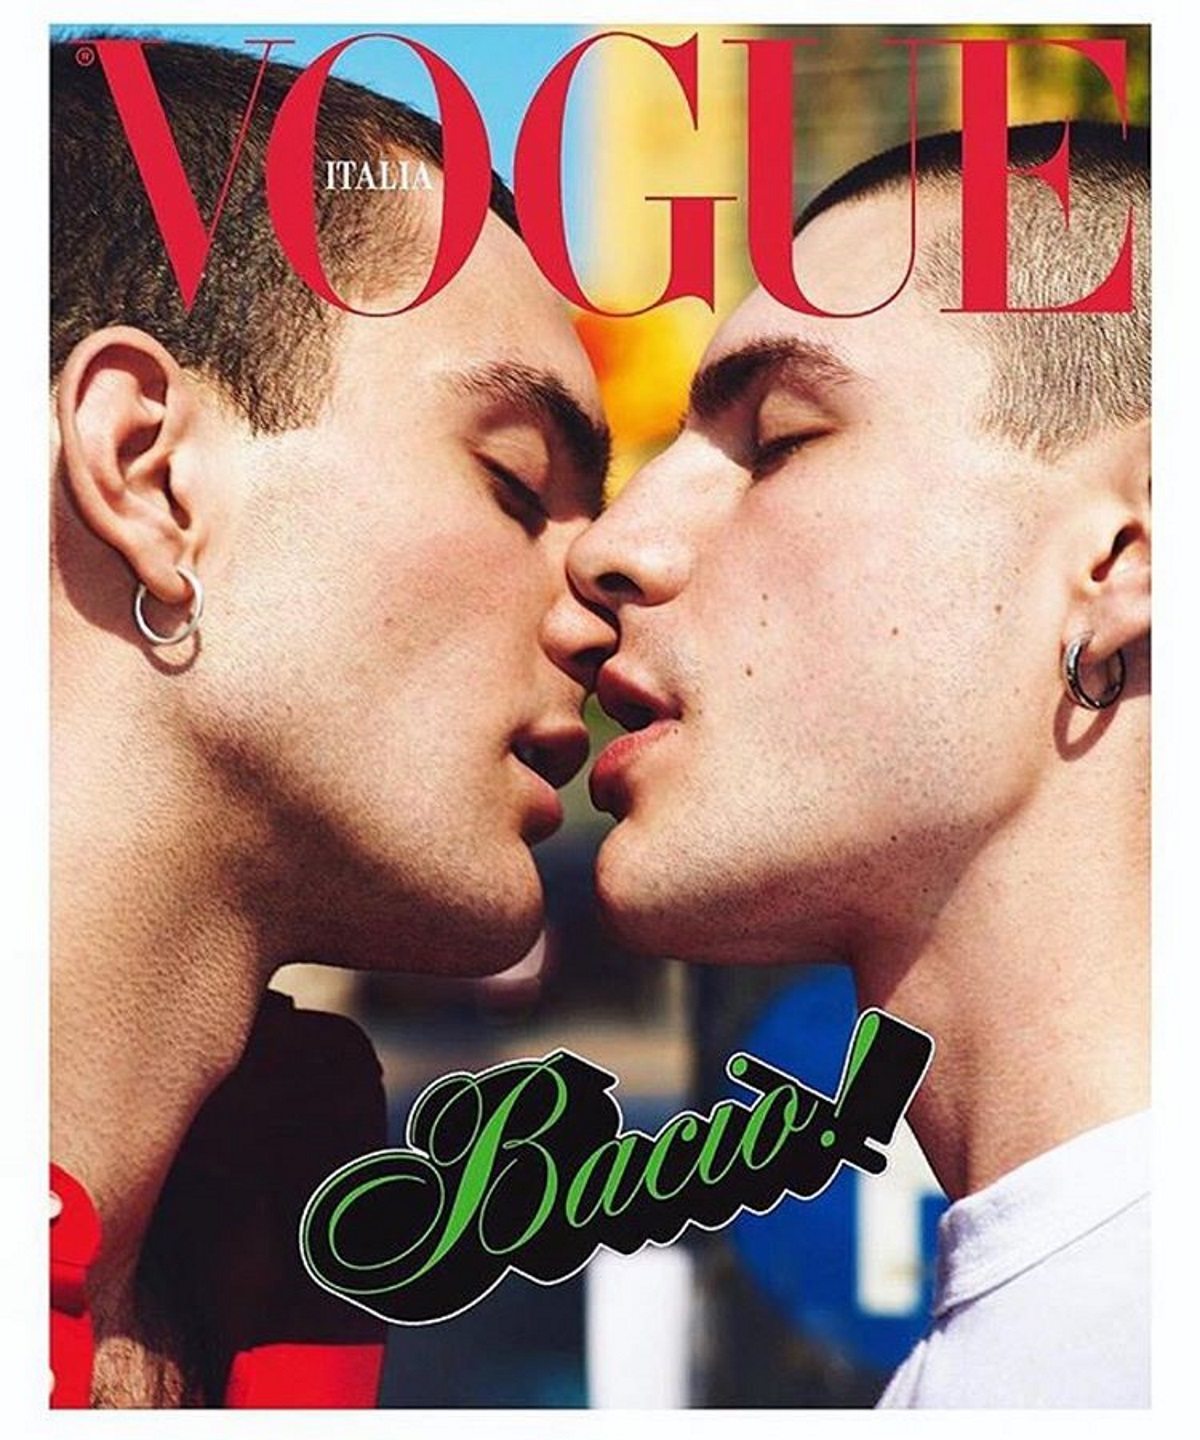 vogue italia gay kiss